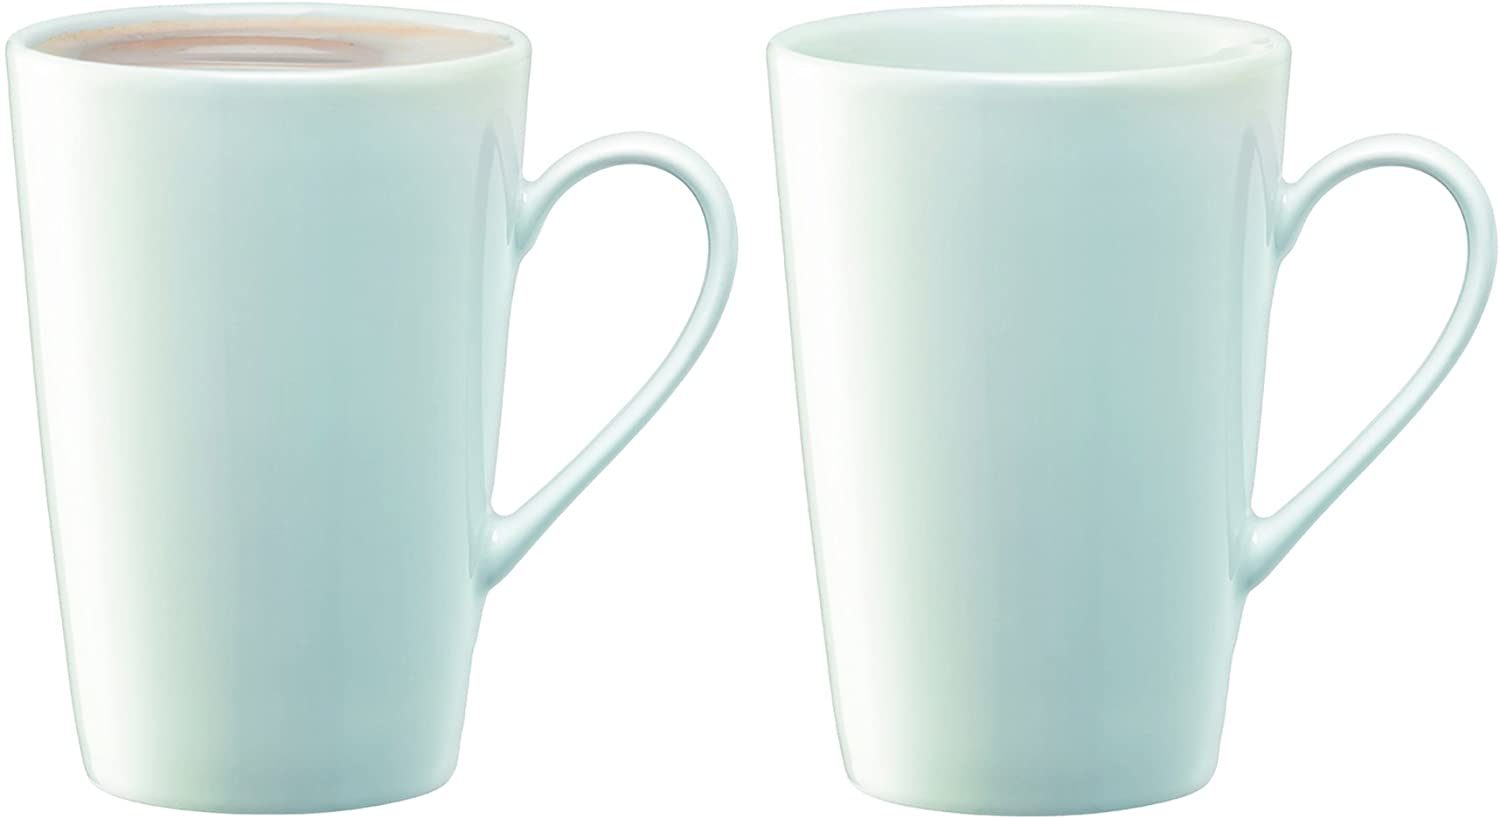 LSA International Dine Latte Mug 0.36L x 2, White (Pack of 2)